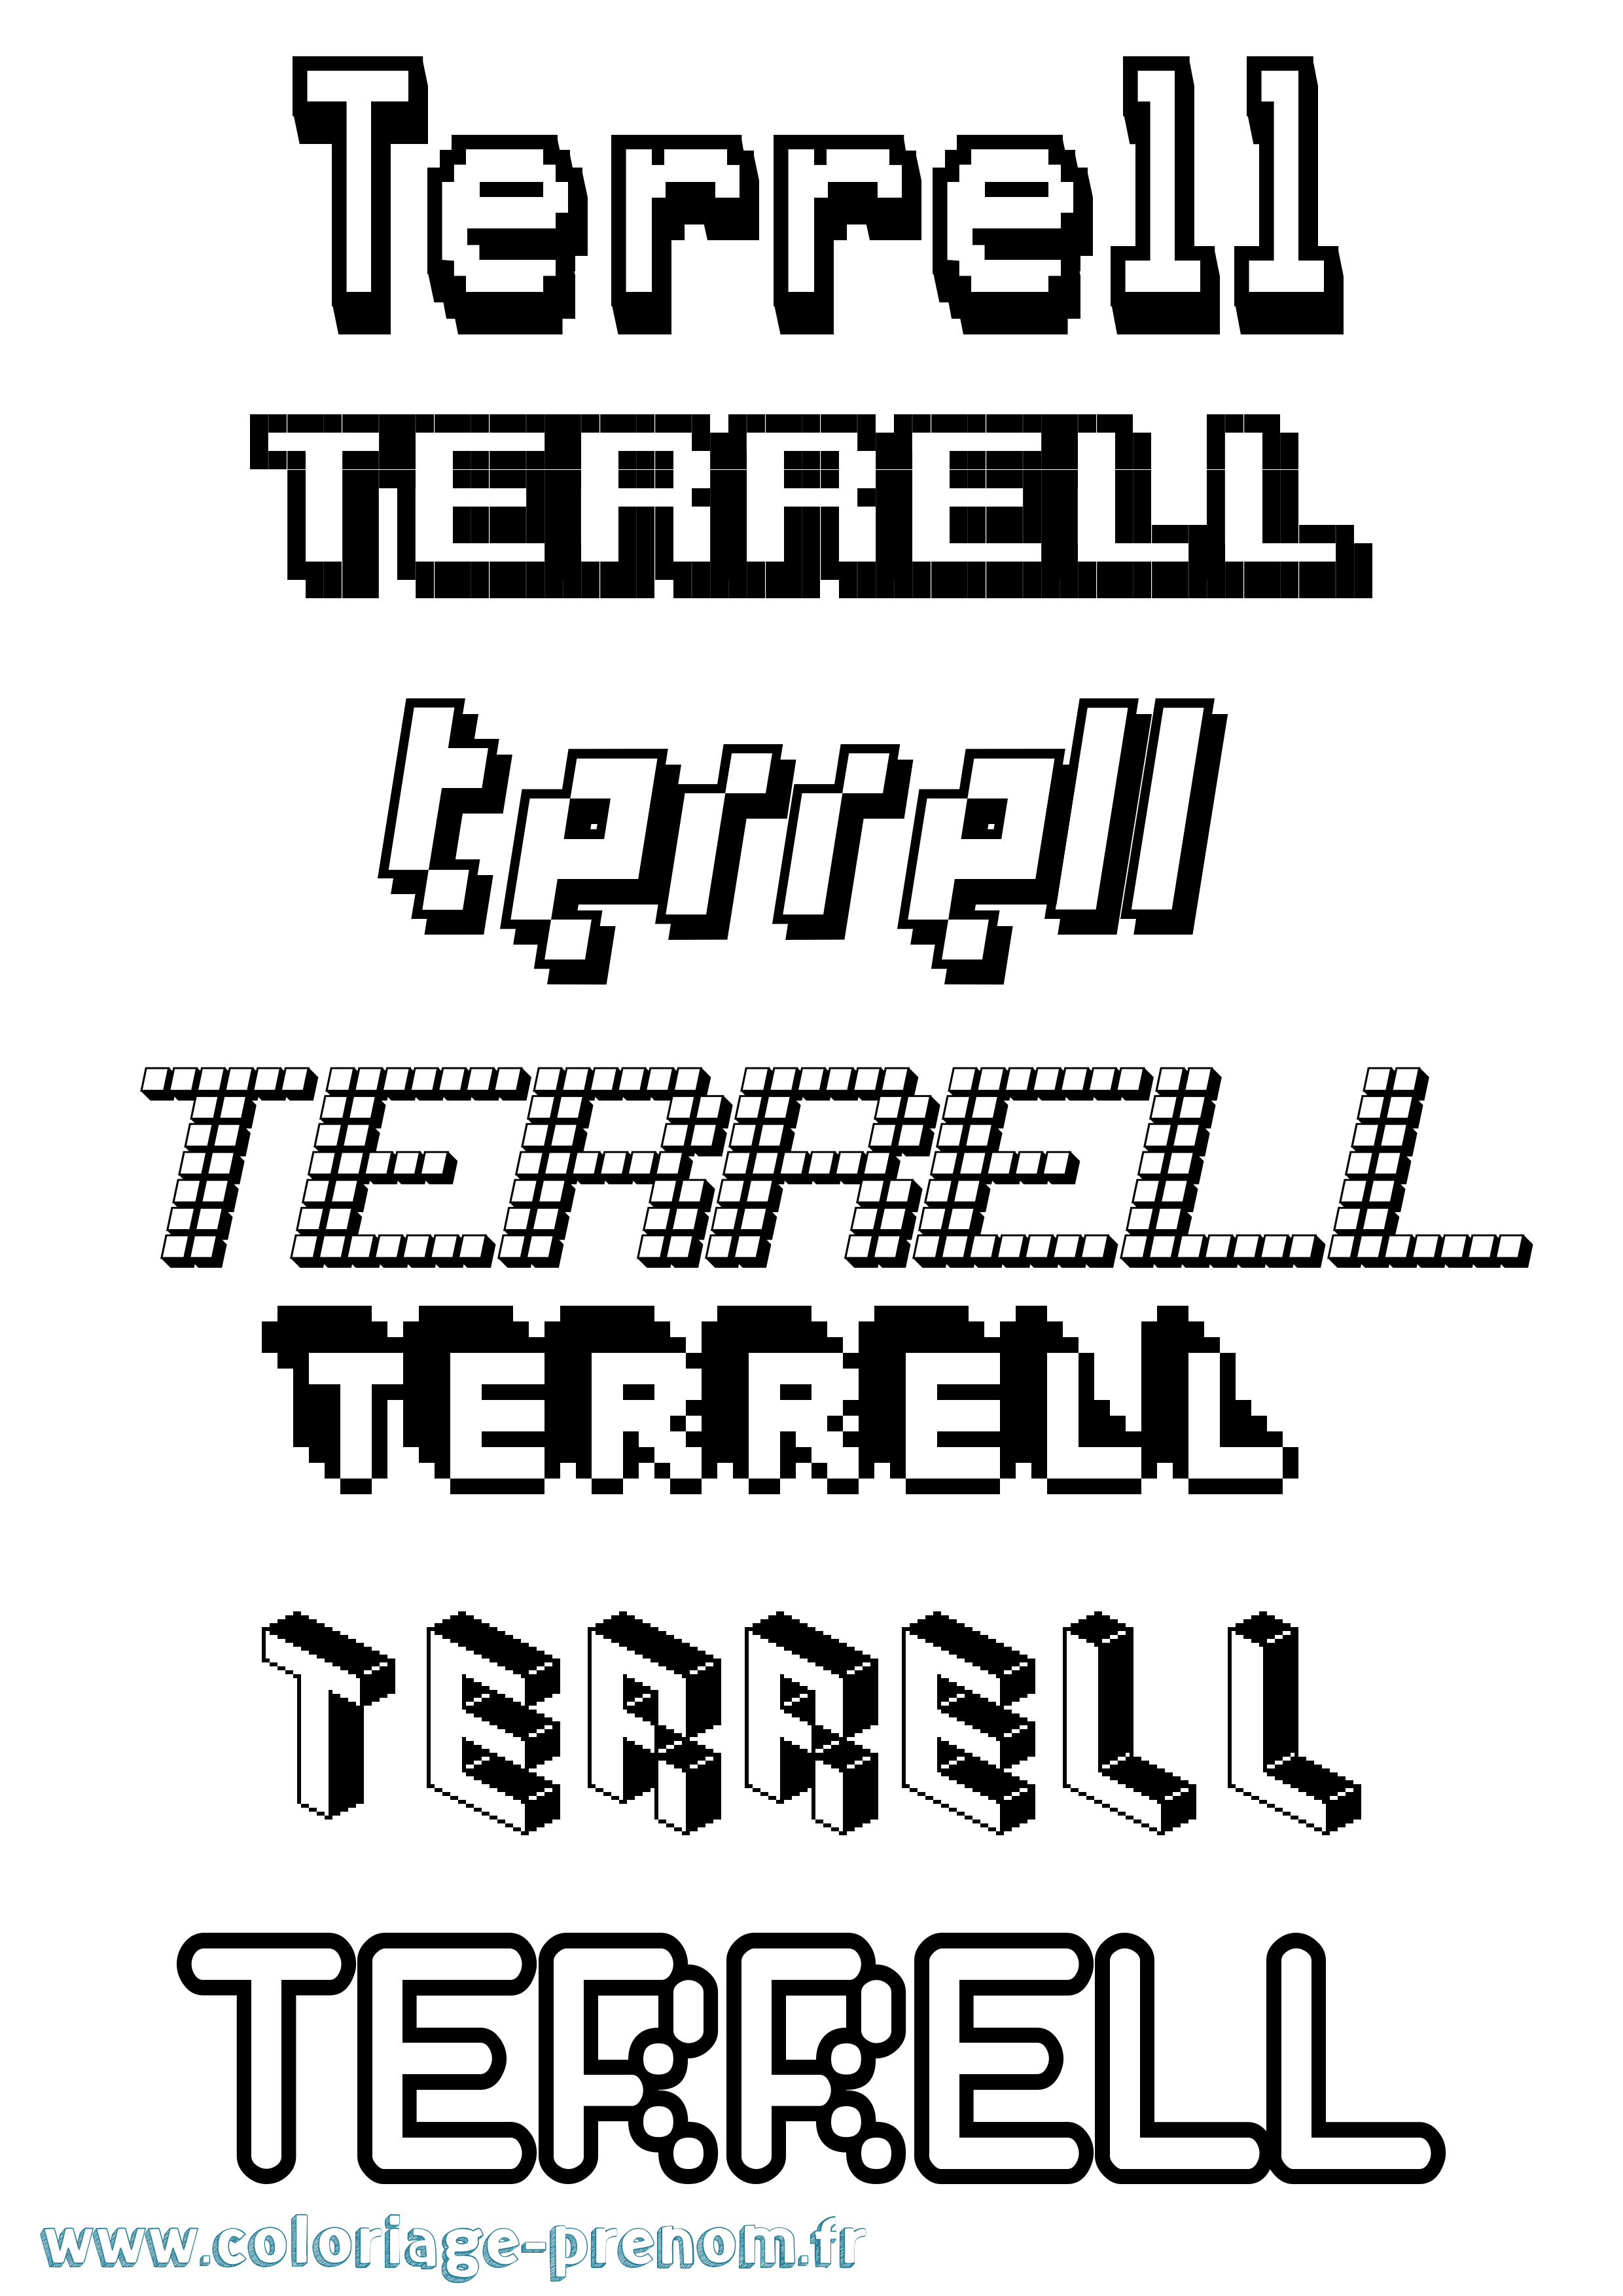 Coloriage prénom Terrell Pixel